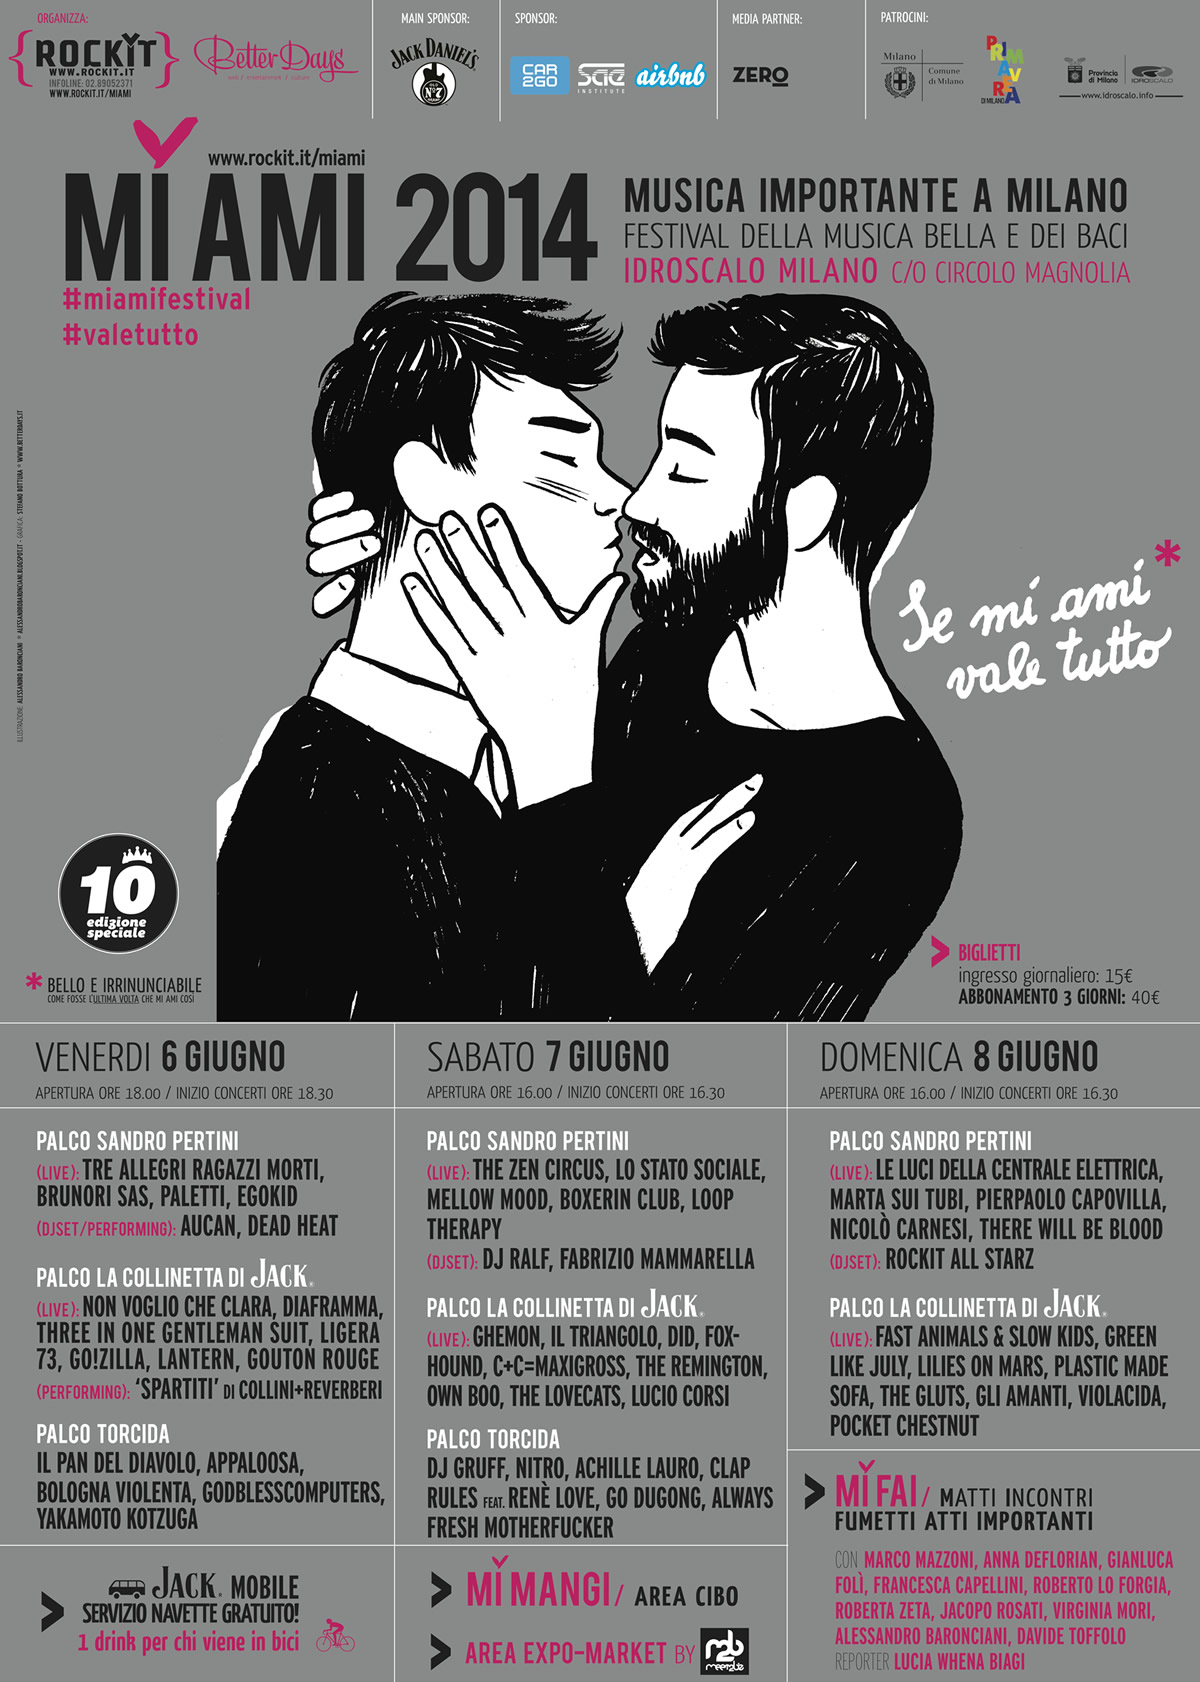 MIAMI2014manif_gay.jpg